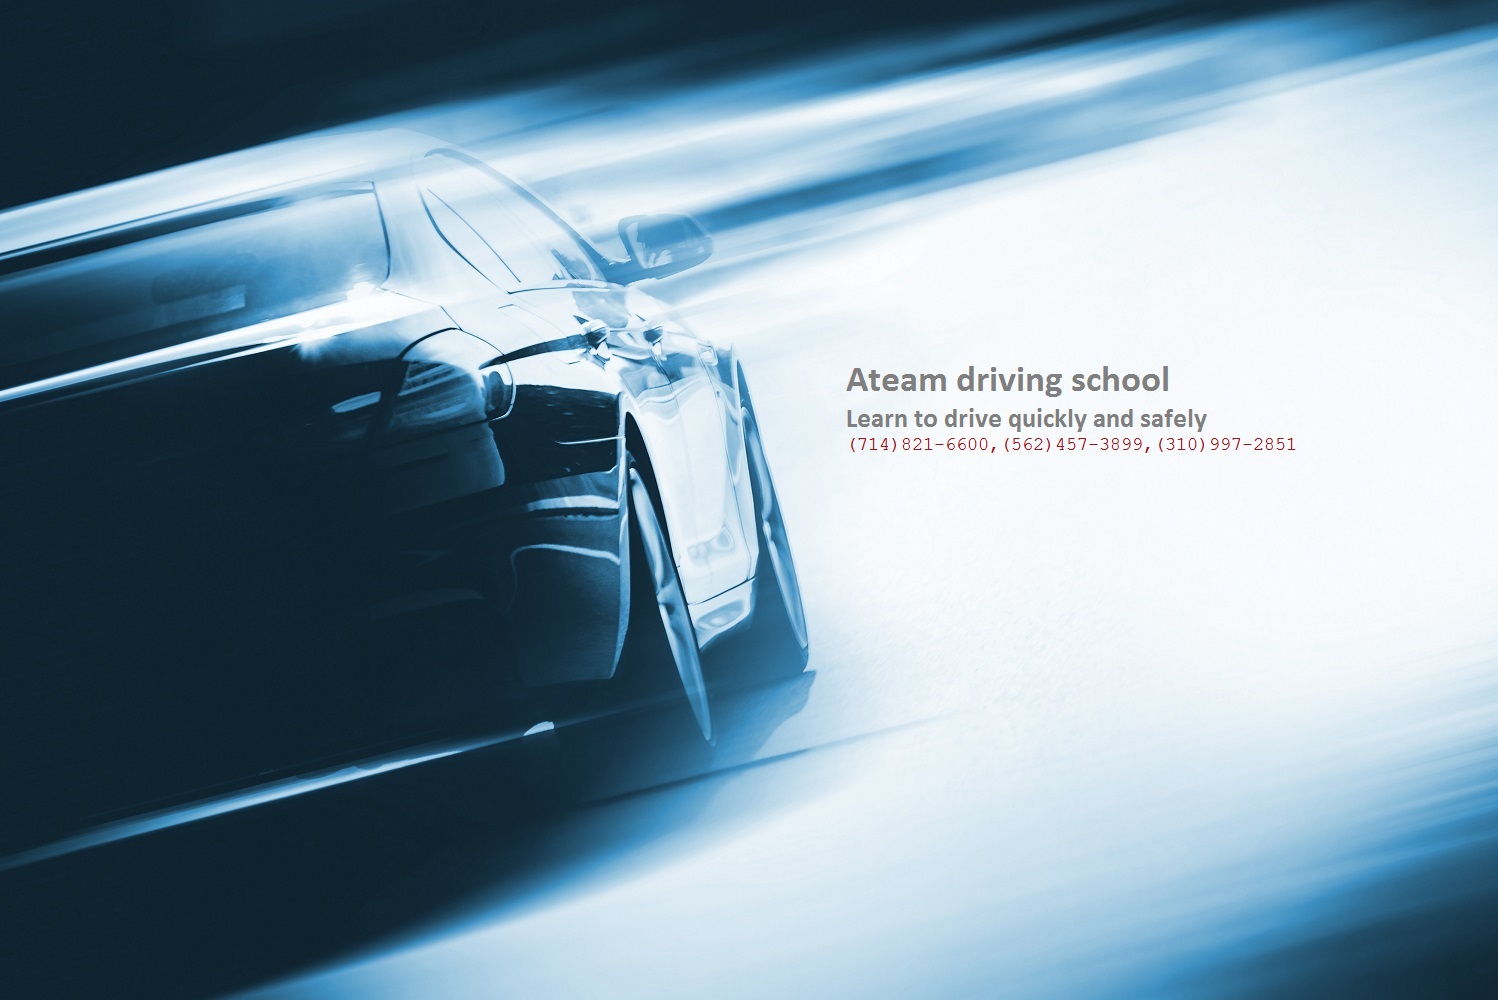 A-Team Driving School